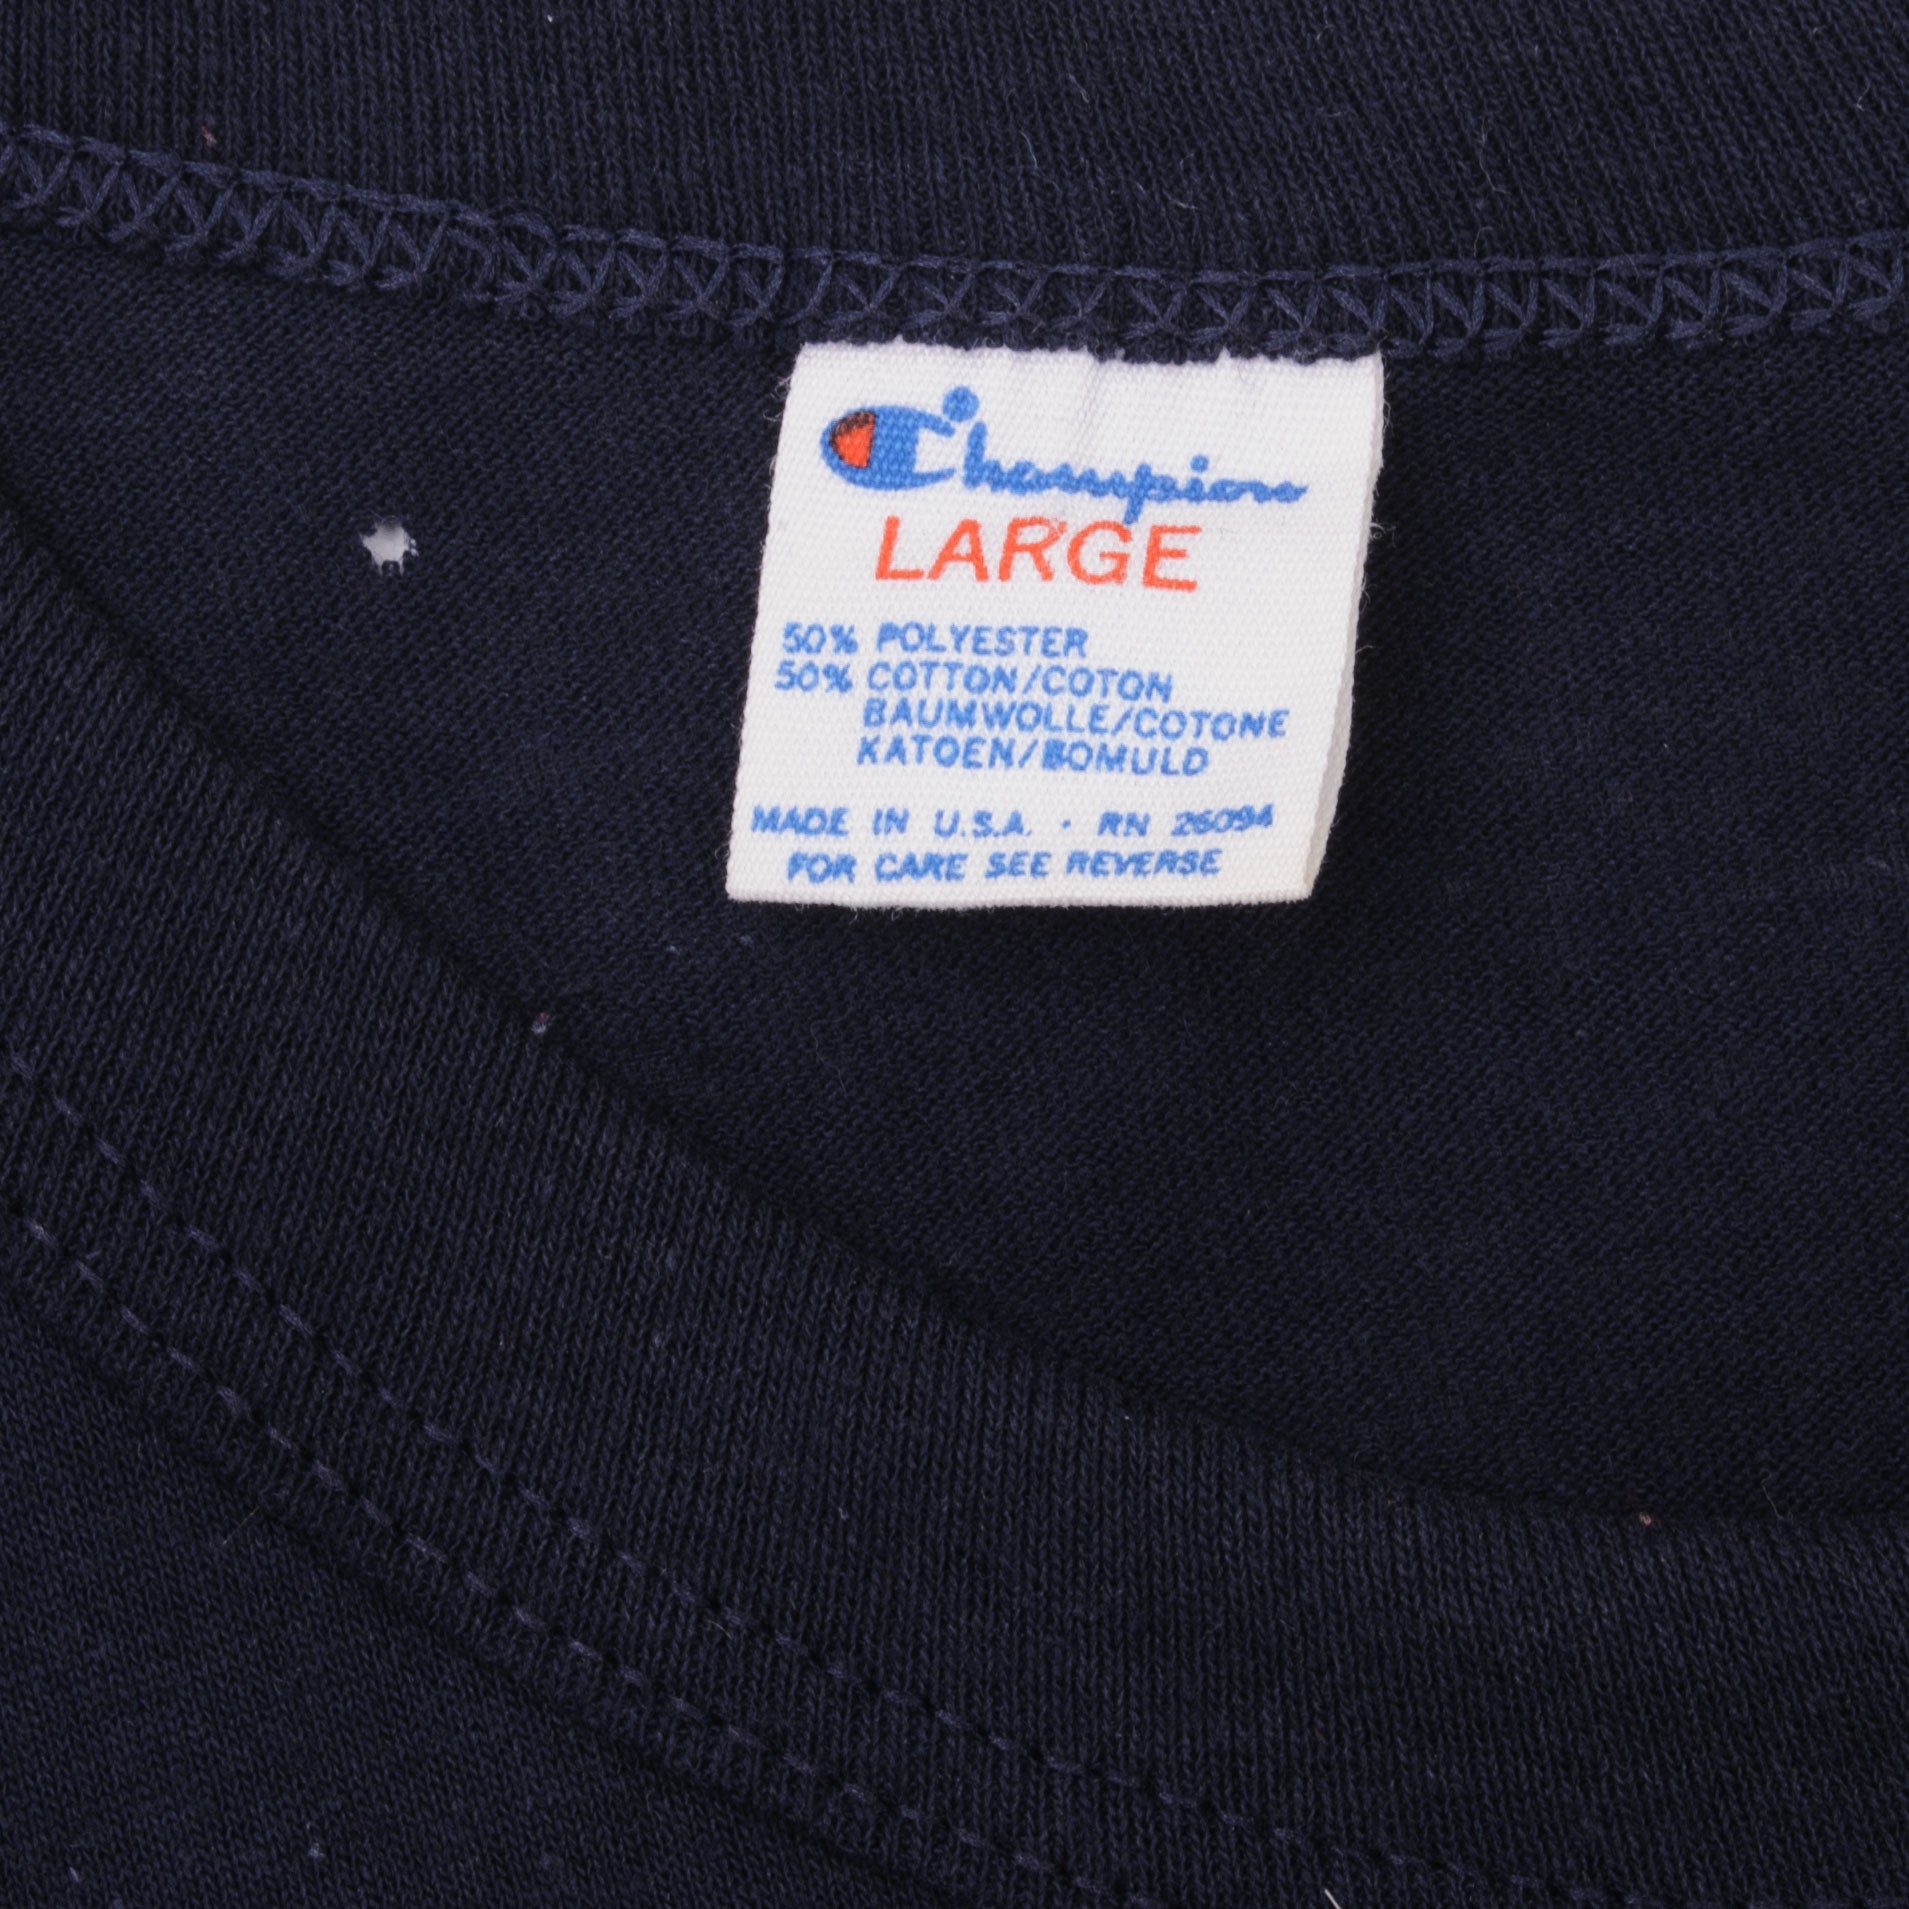 Sports / College Vintage Champion MLB New York Yankees Tee Shirt 1988 Medium Made in USA